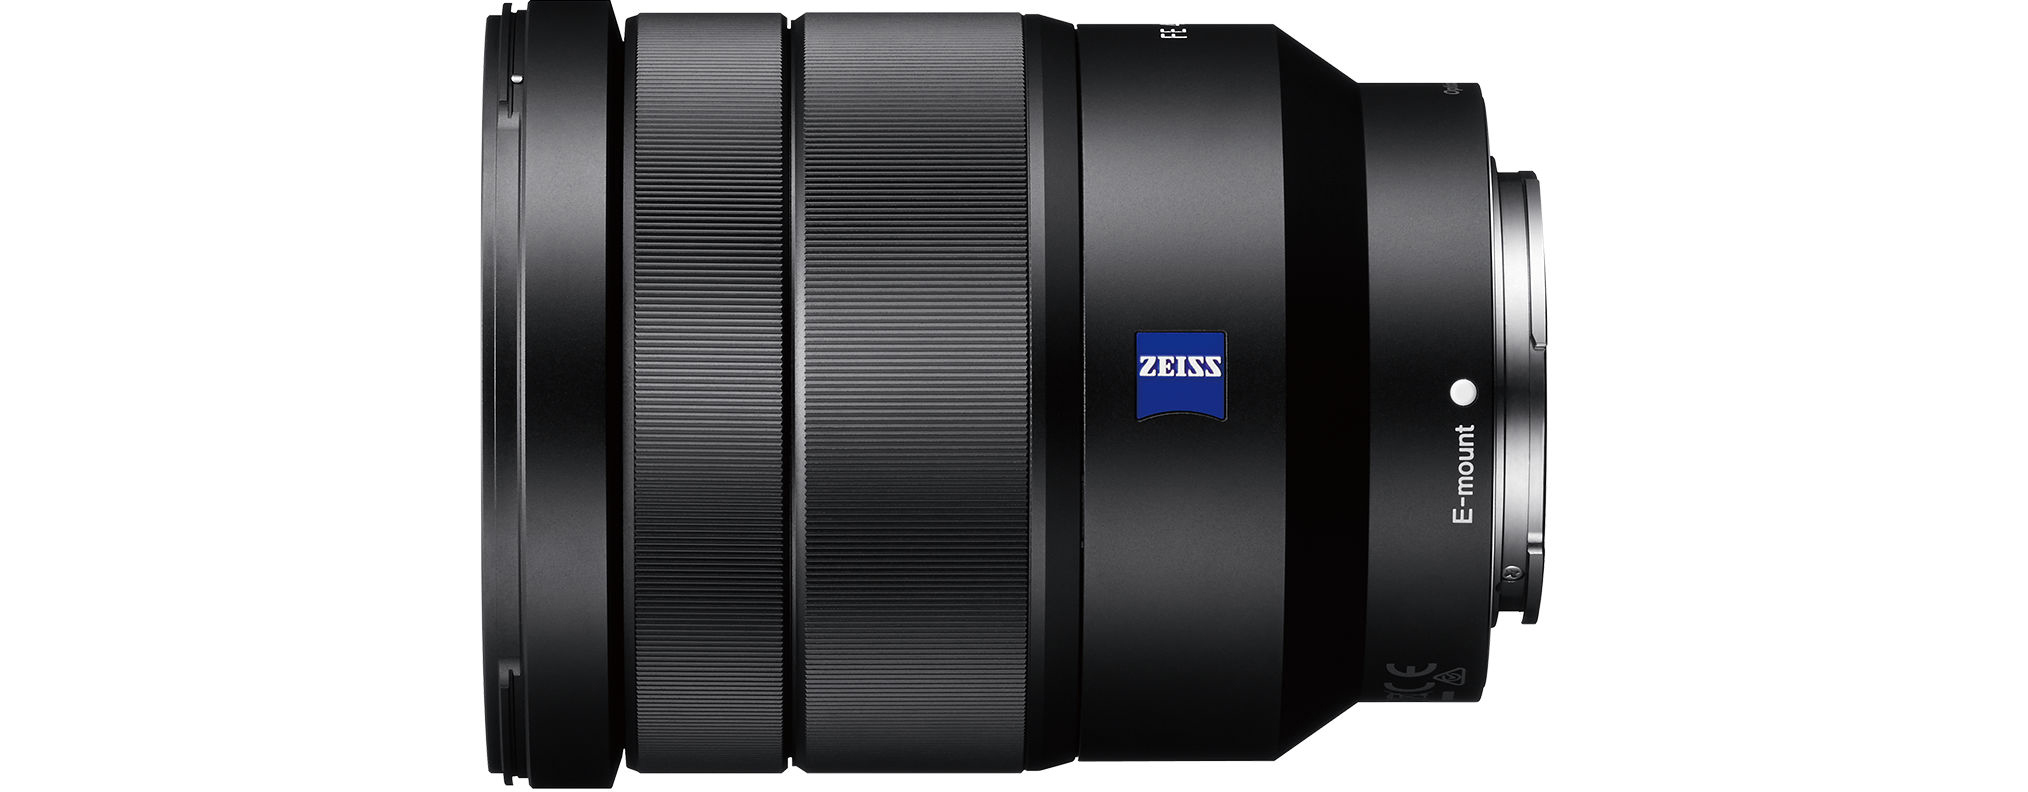 SONY SEL1635Z Zeiss Vollformat Blende Sony für ED, mm - Circulare Schwarz) mm ASPH, 16 DMR, f/4.0 (Objektiv 35 OSS, E-Mount